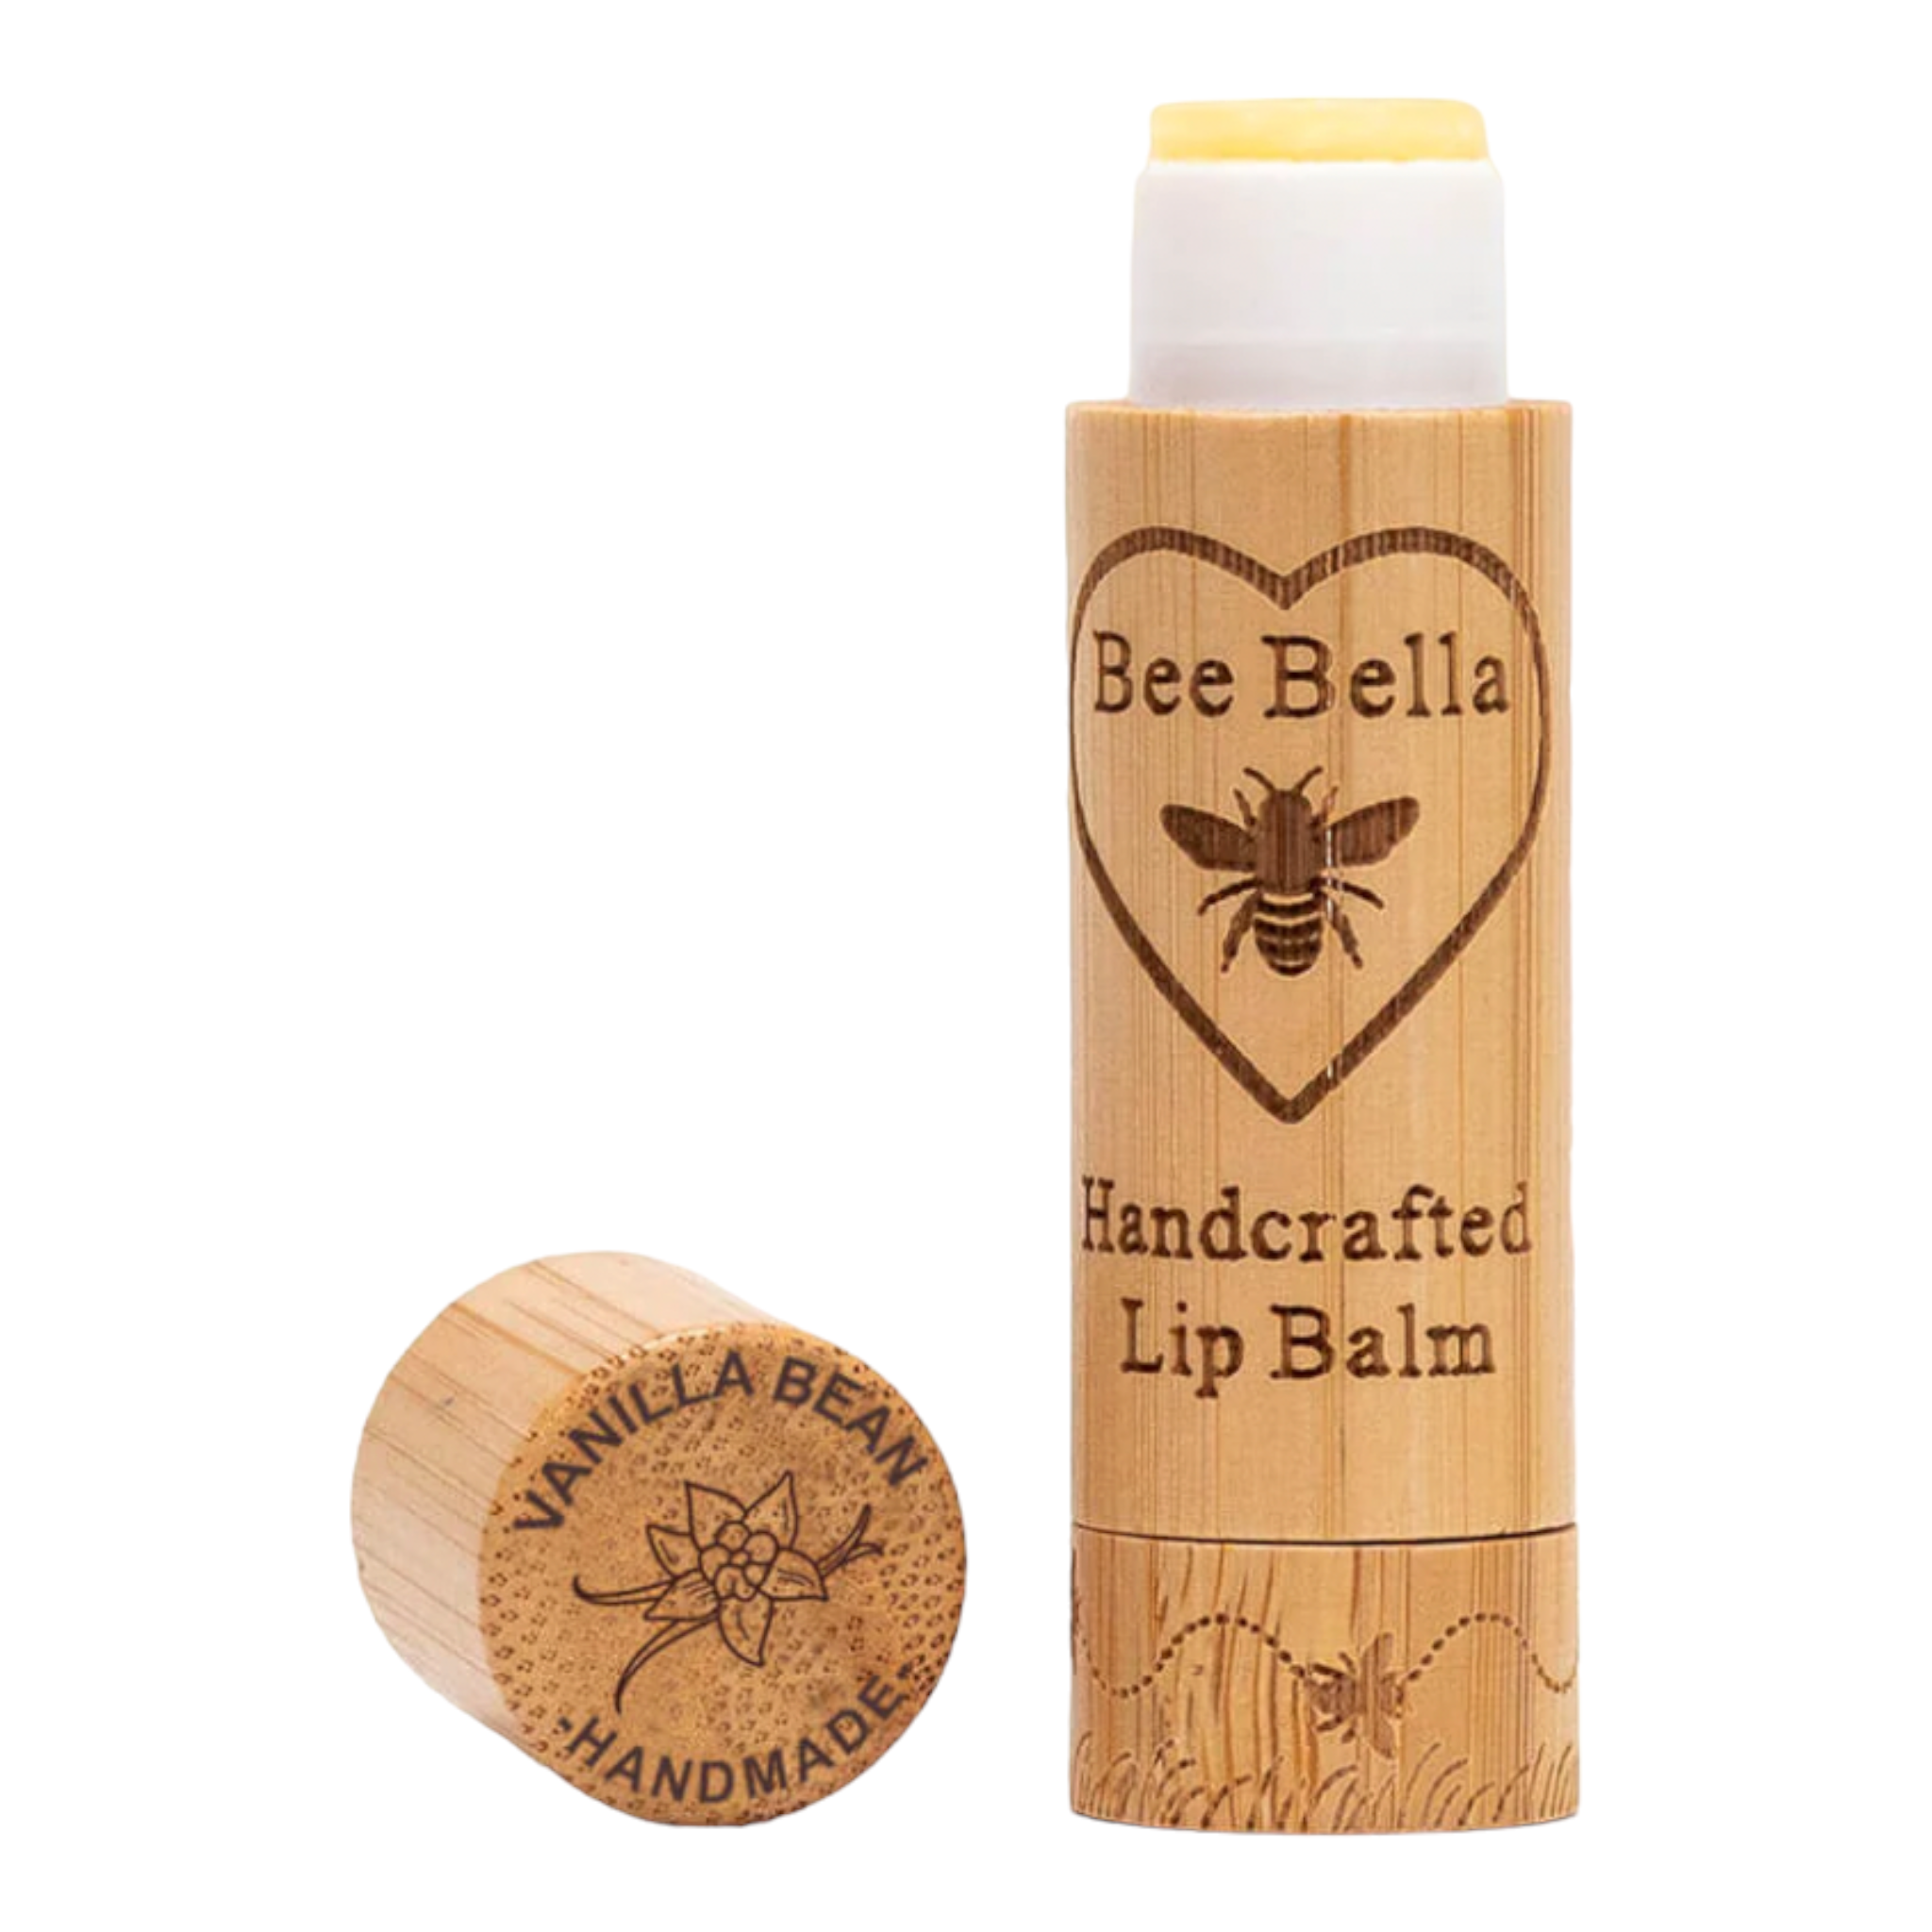 Bee Bella - Vanilla Bean Lip Balm: 6g/.21oz